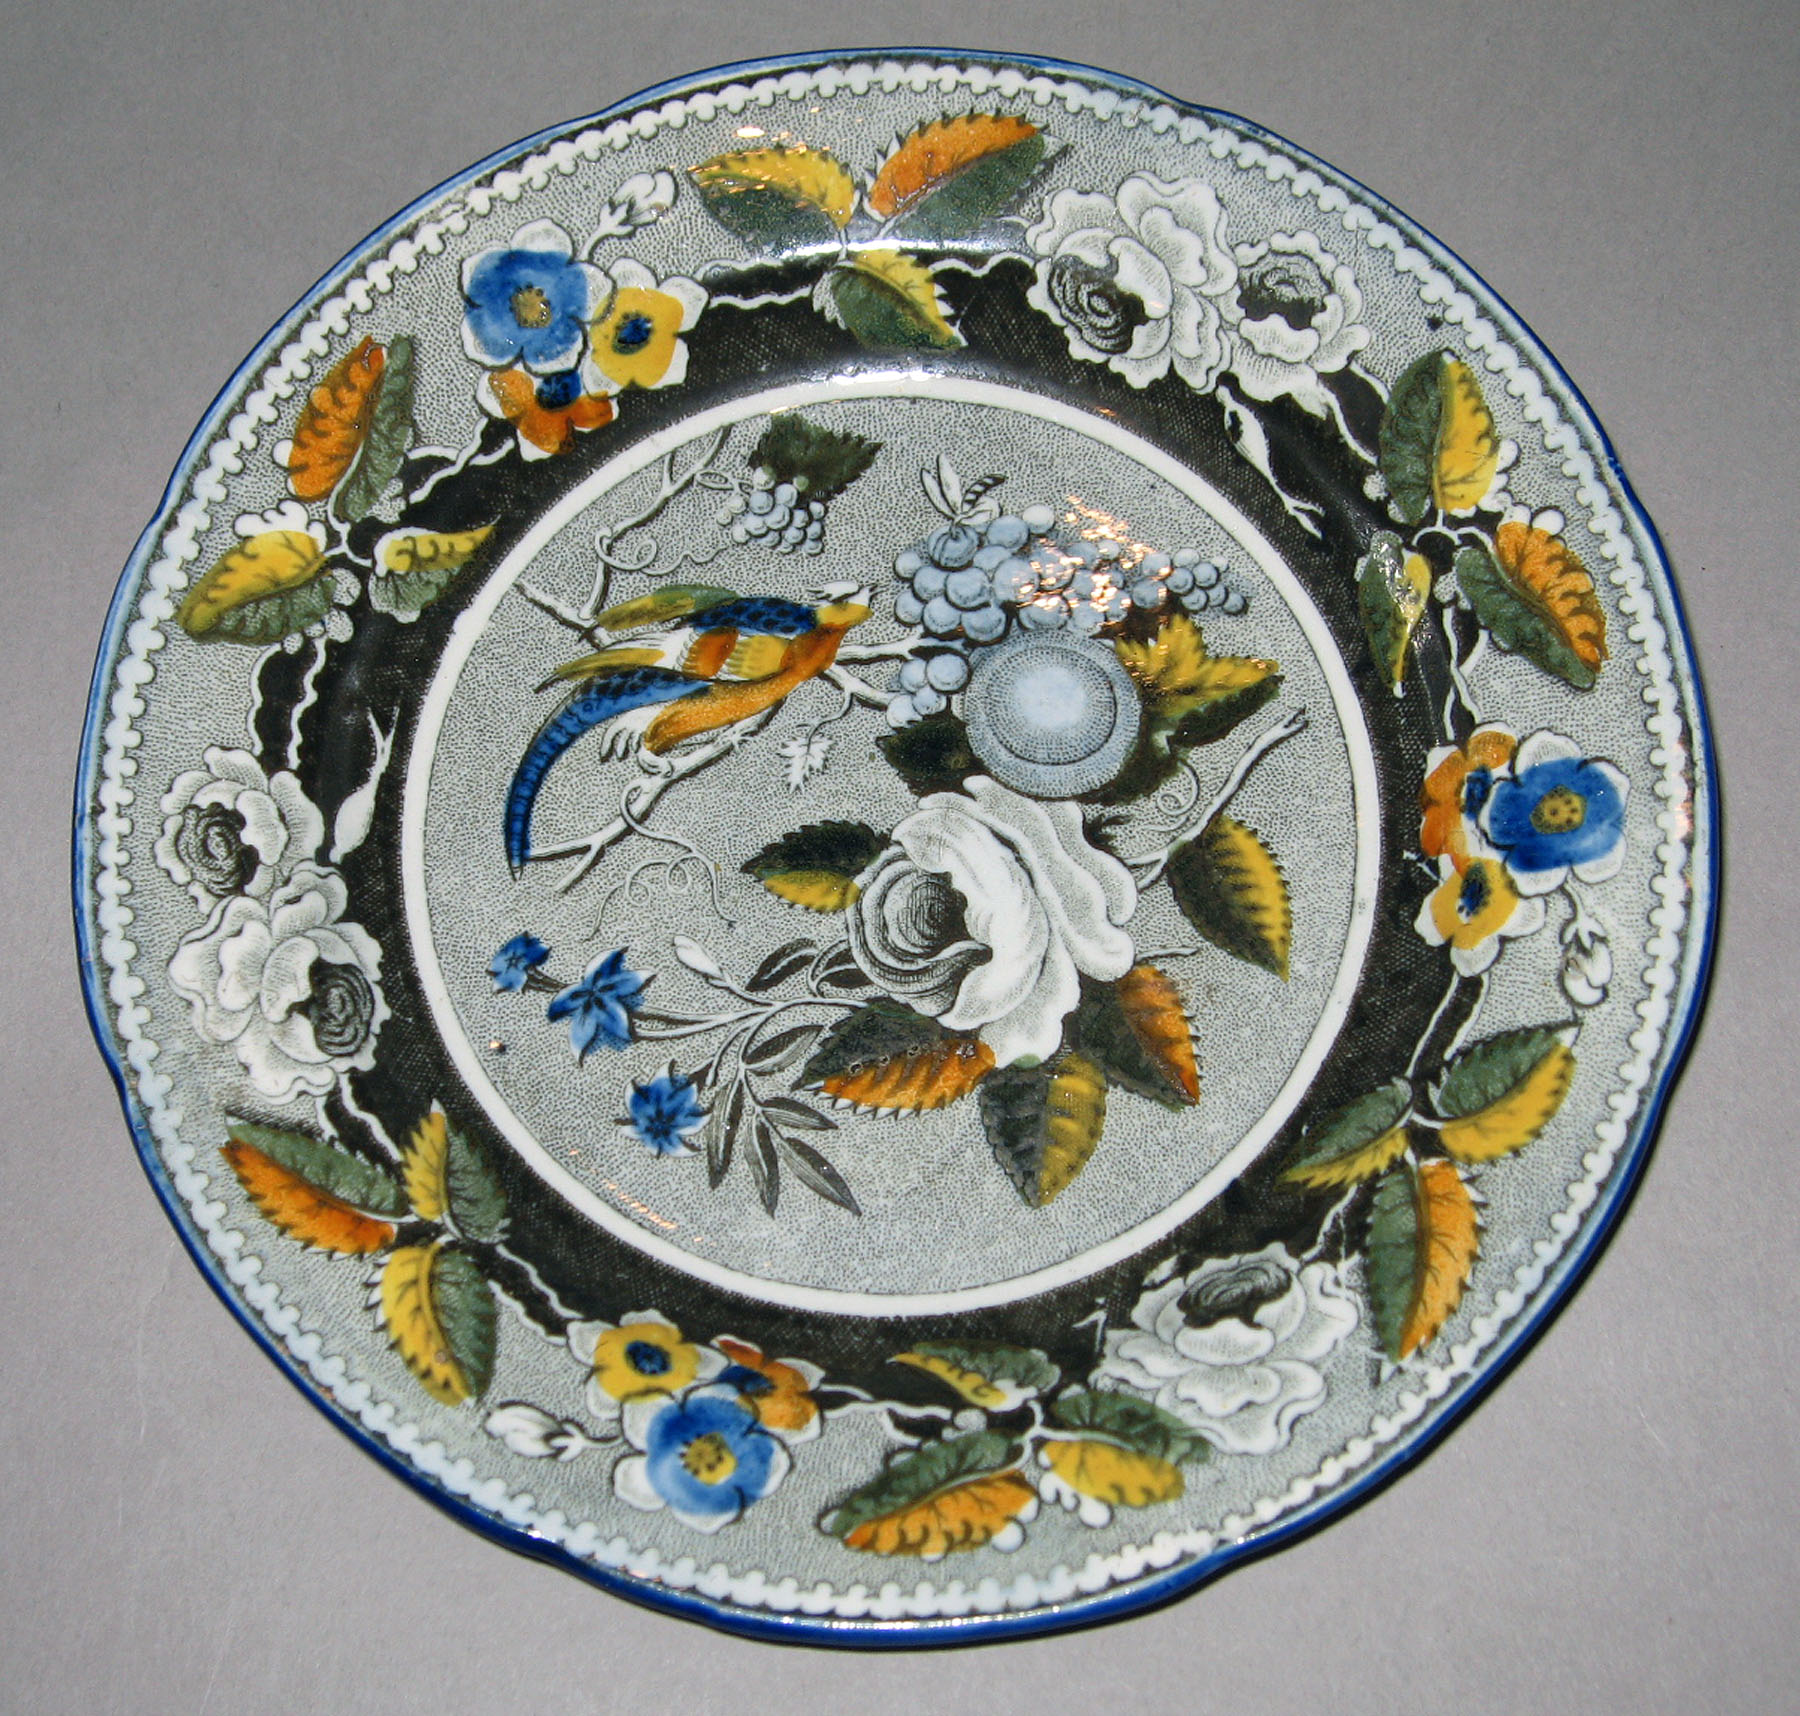 1965.1905 Pearlware plate